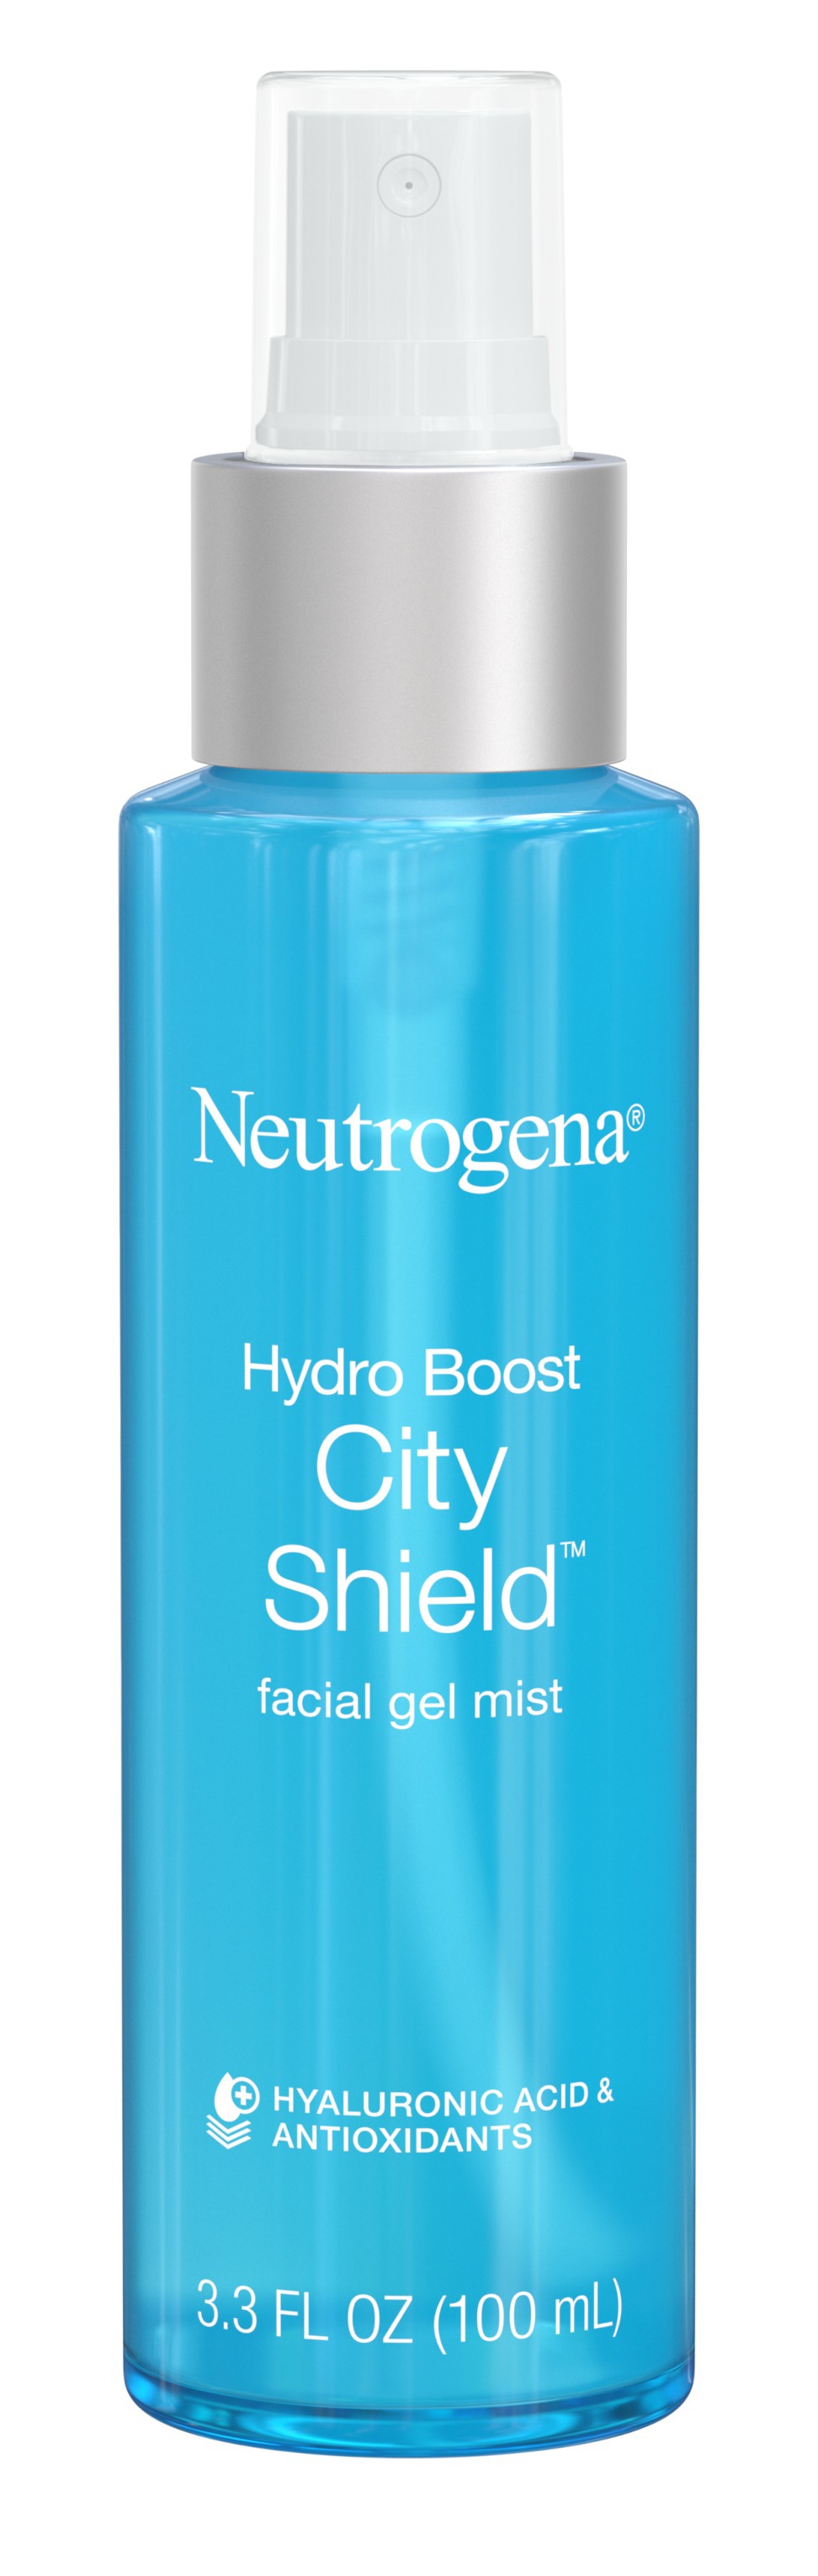 Neutrogena Hydro Boost City Shield Facial Mist Gel